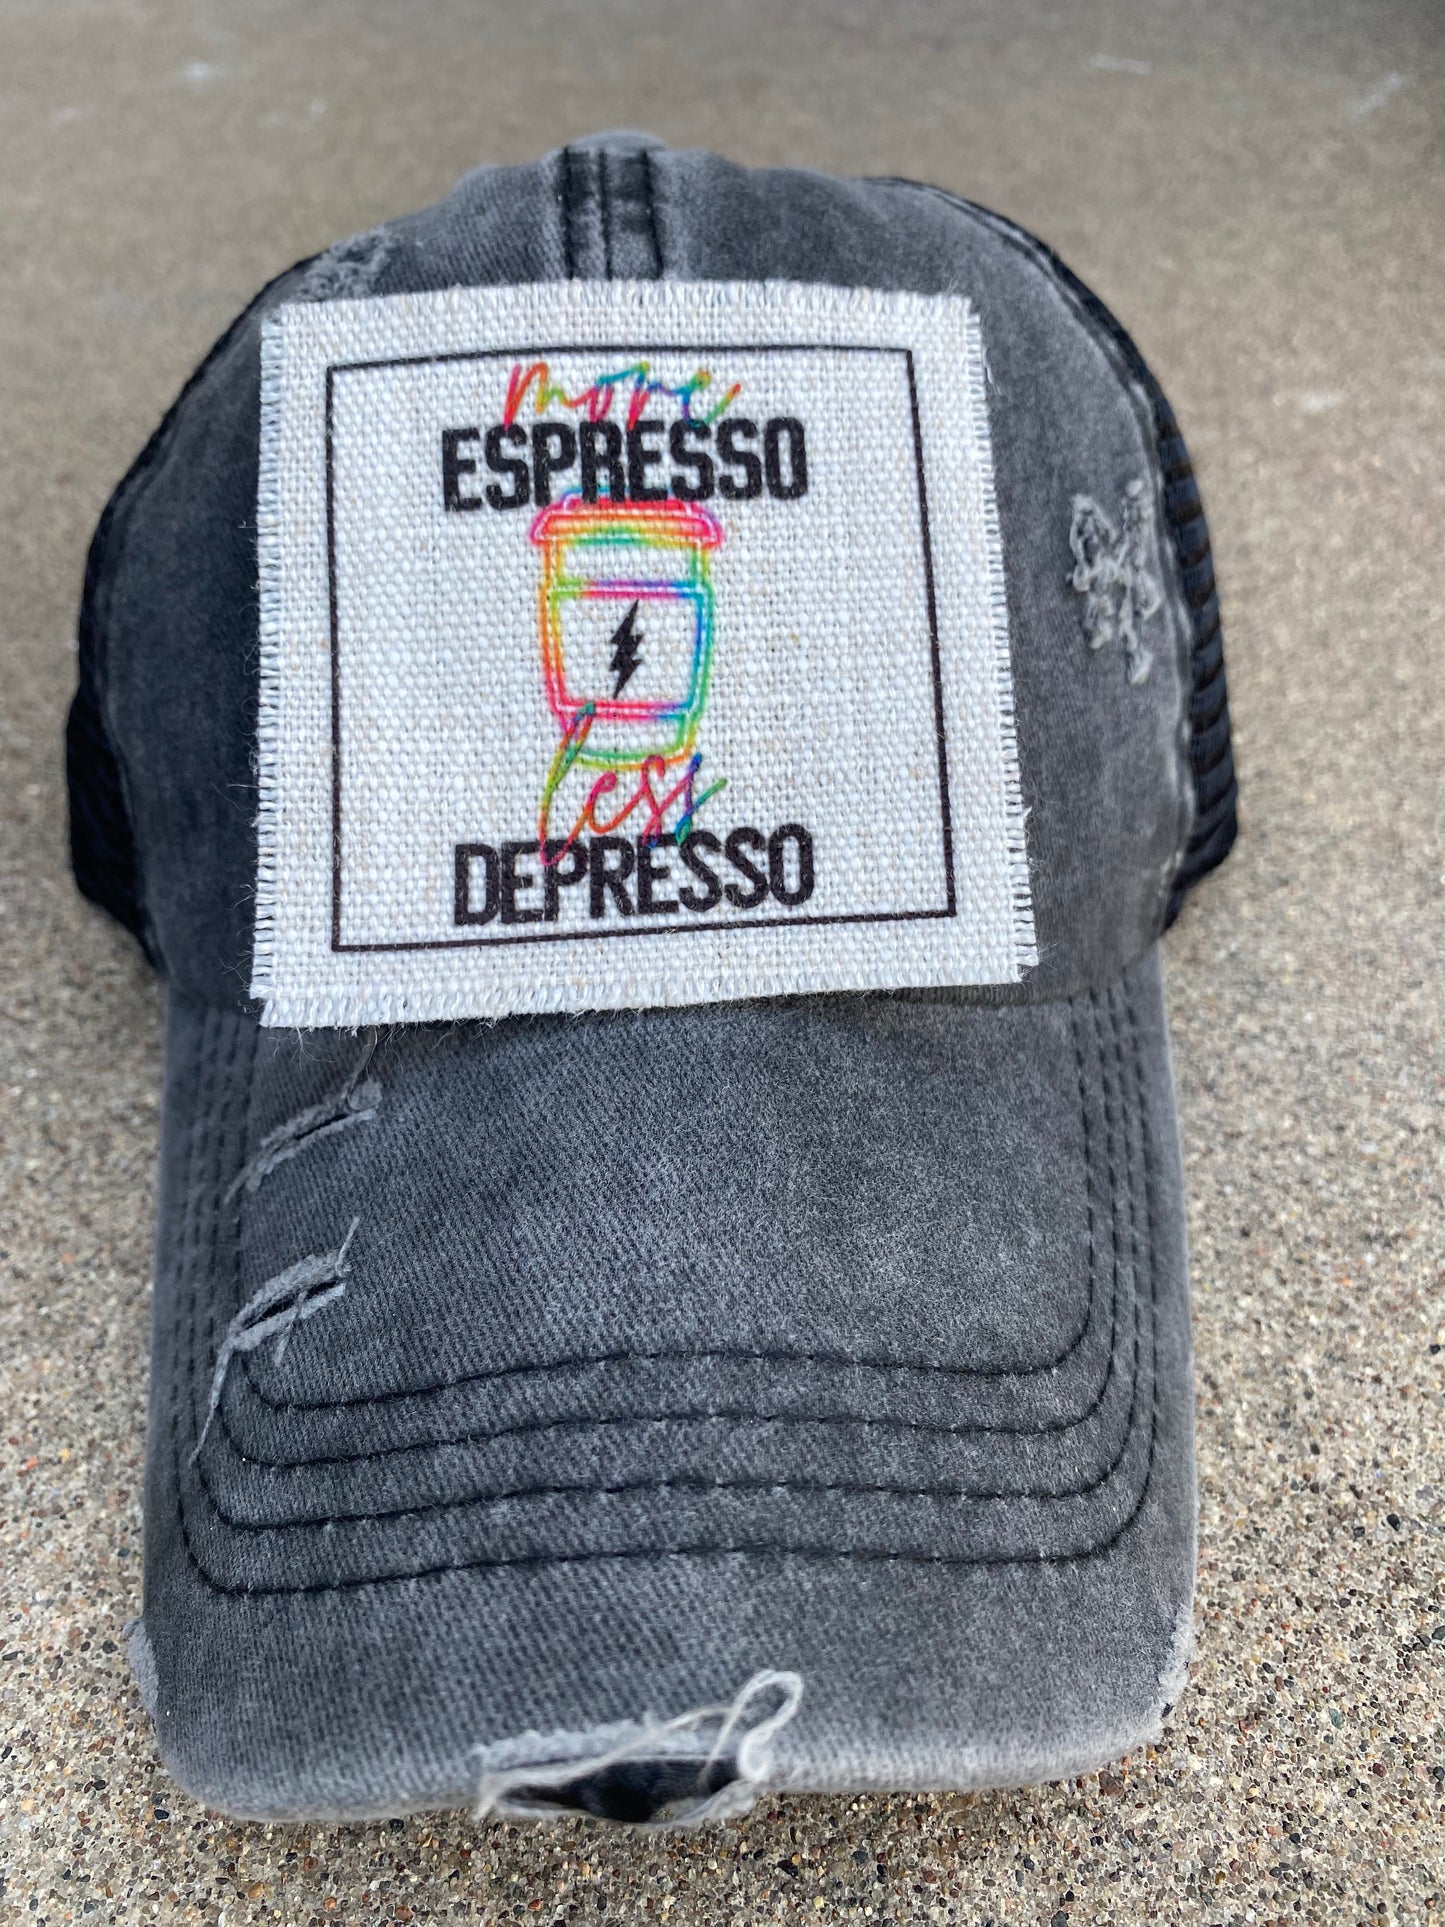 More Espresso Less Depresso Hat Patch